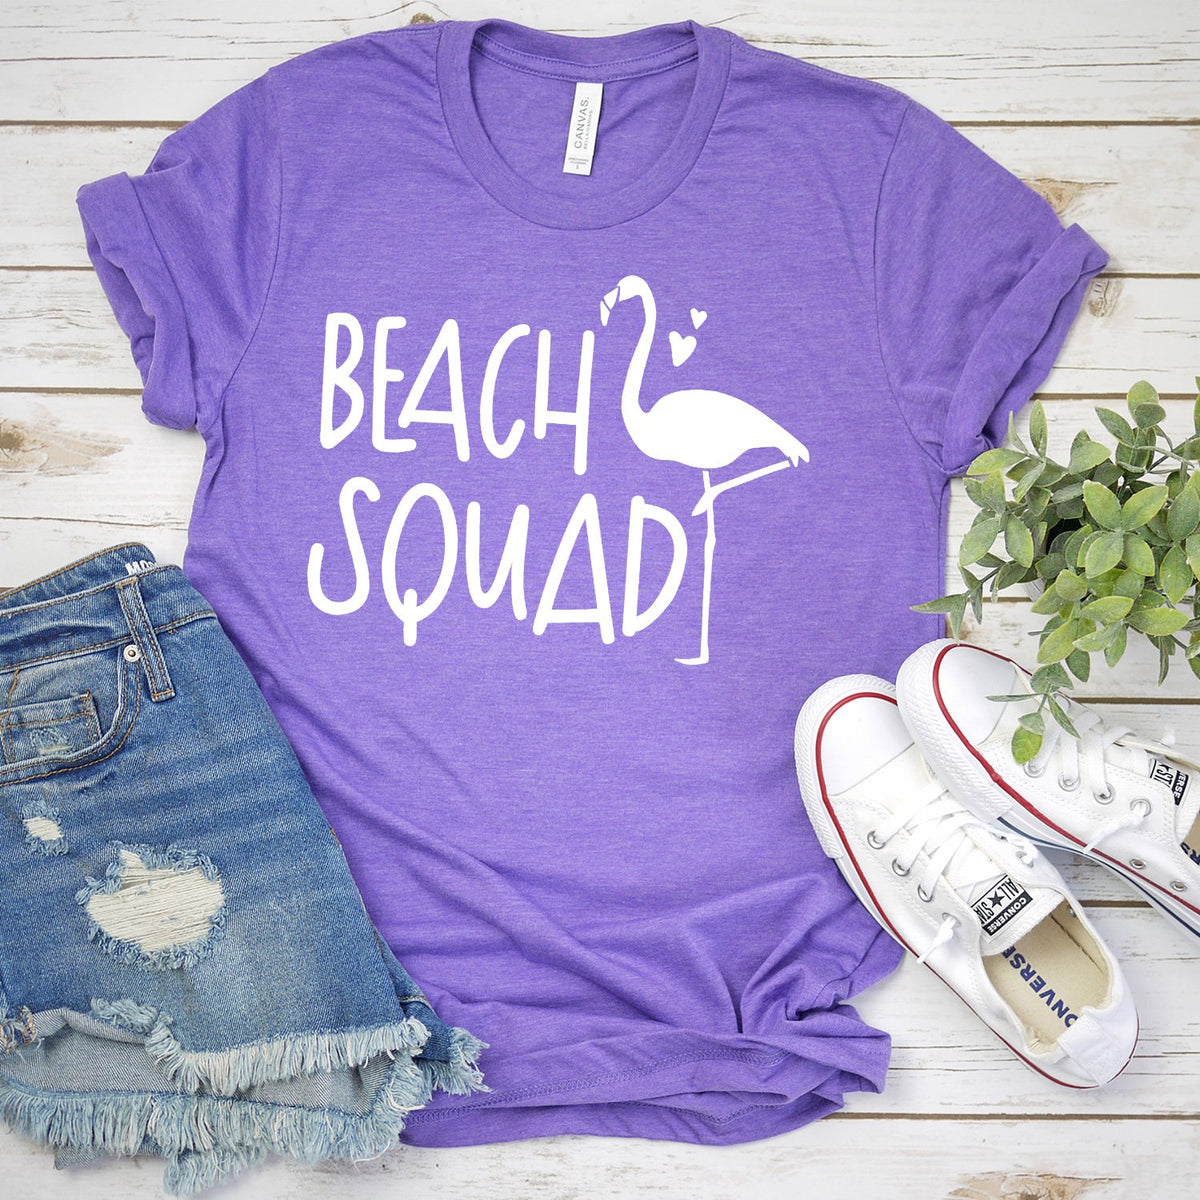 Beach Squad with Swan - Short Sleeve Tee Shirt